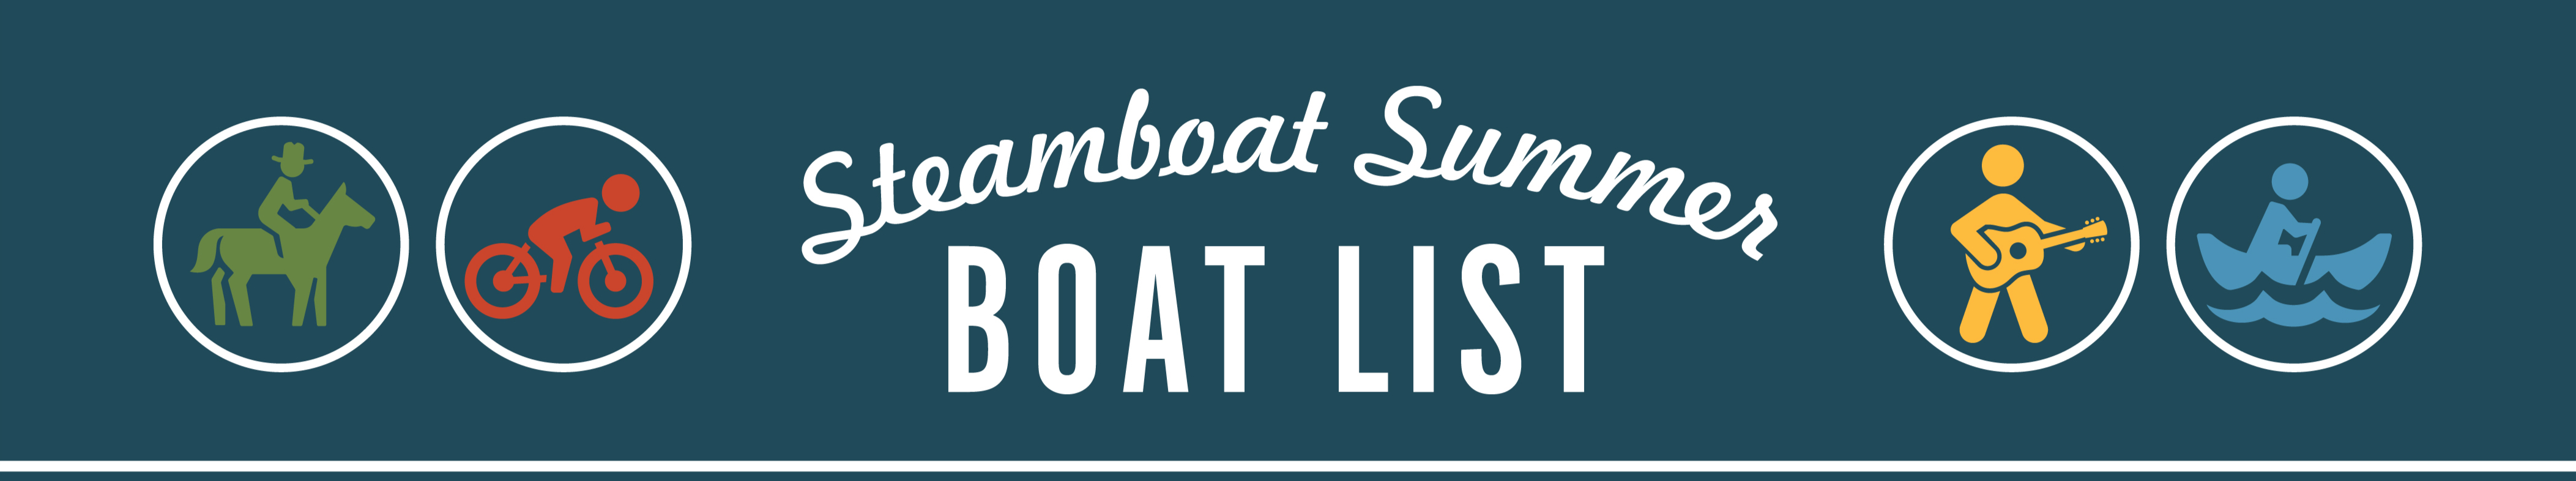 Steamboat Summer Boat List